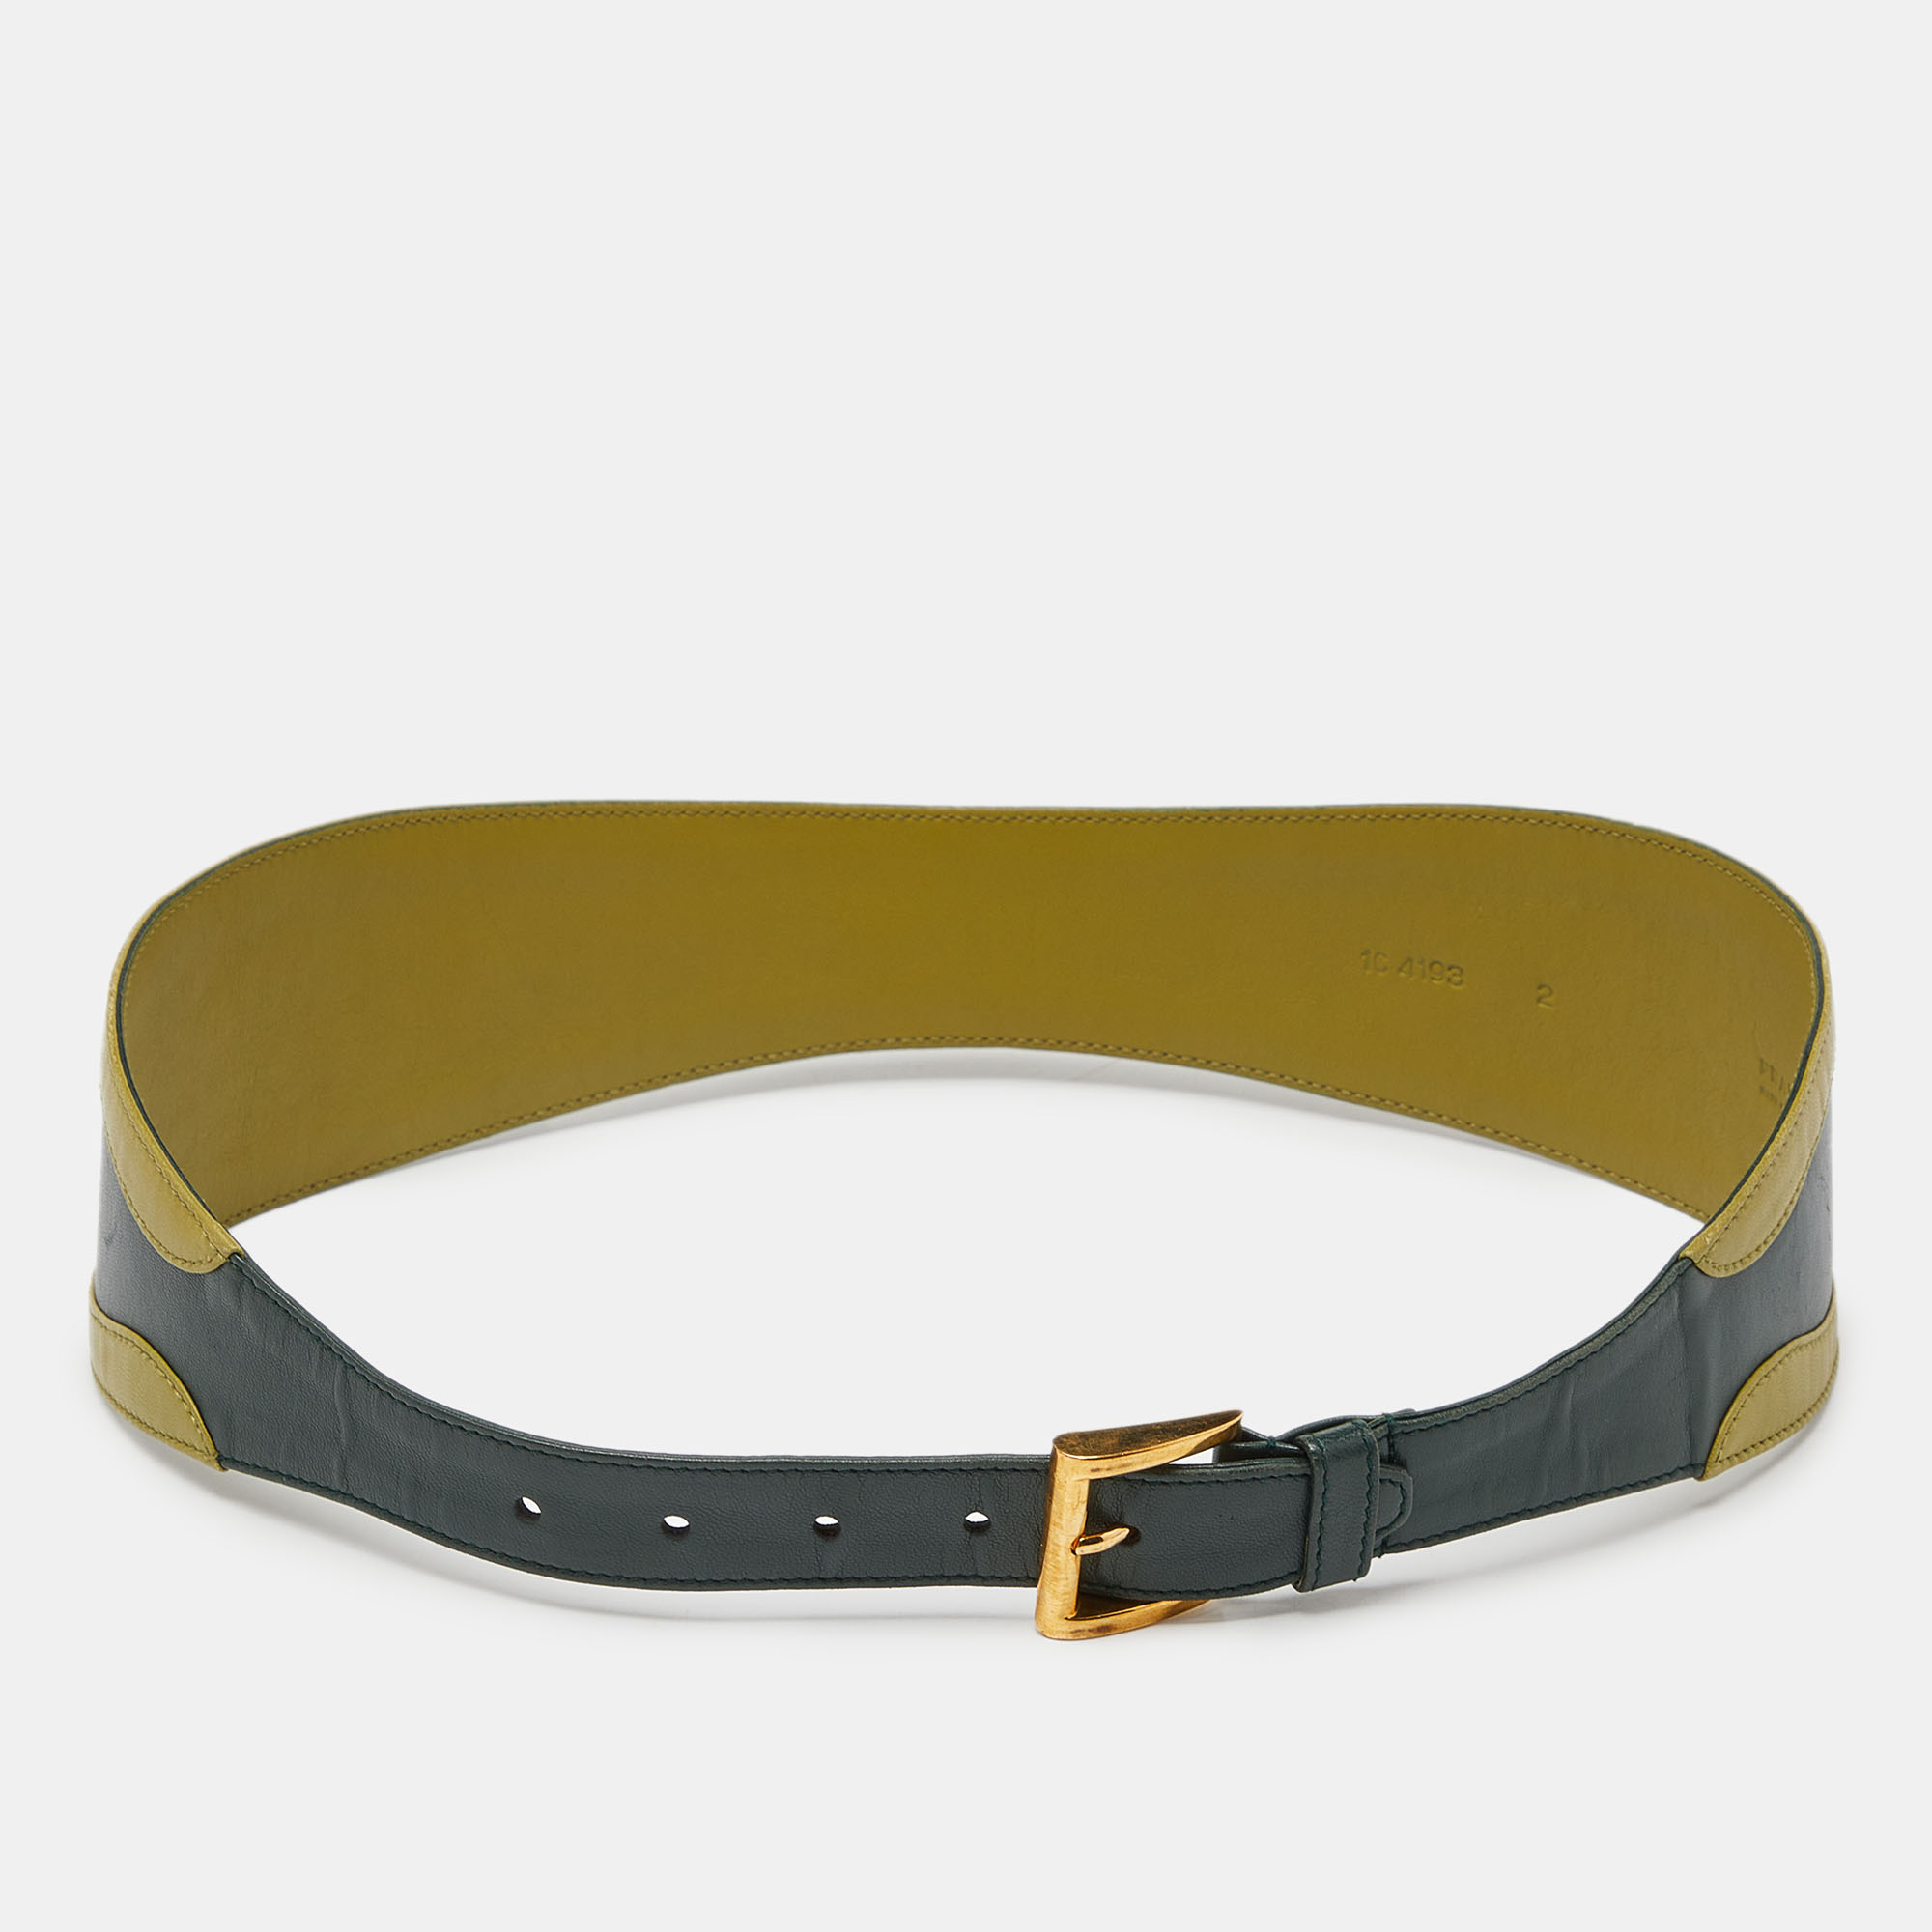 Prada two tone green leather wide buckle belt 80cm